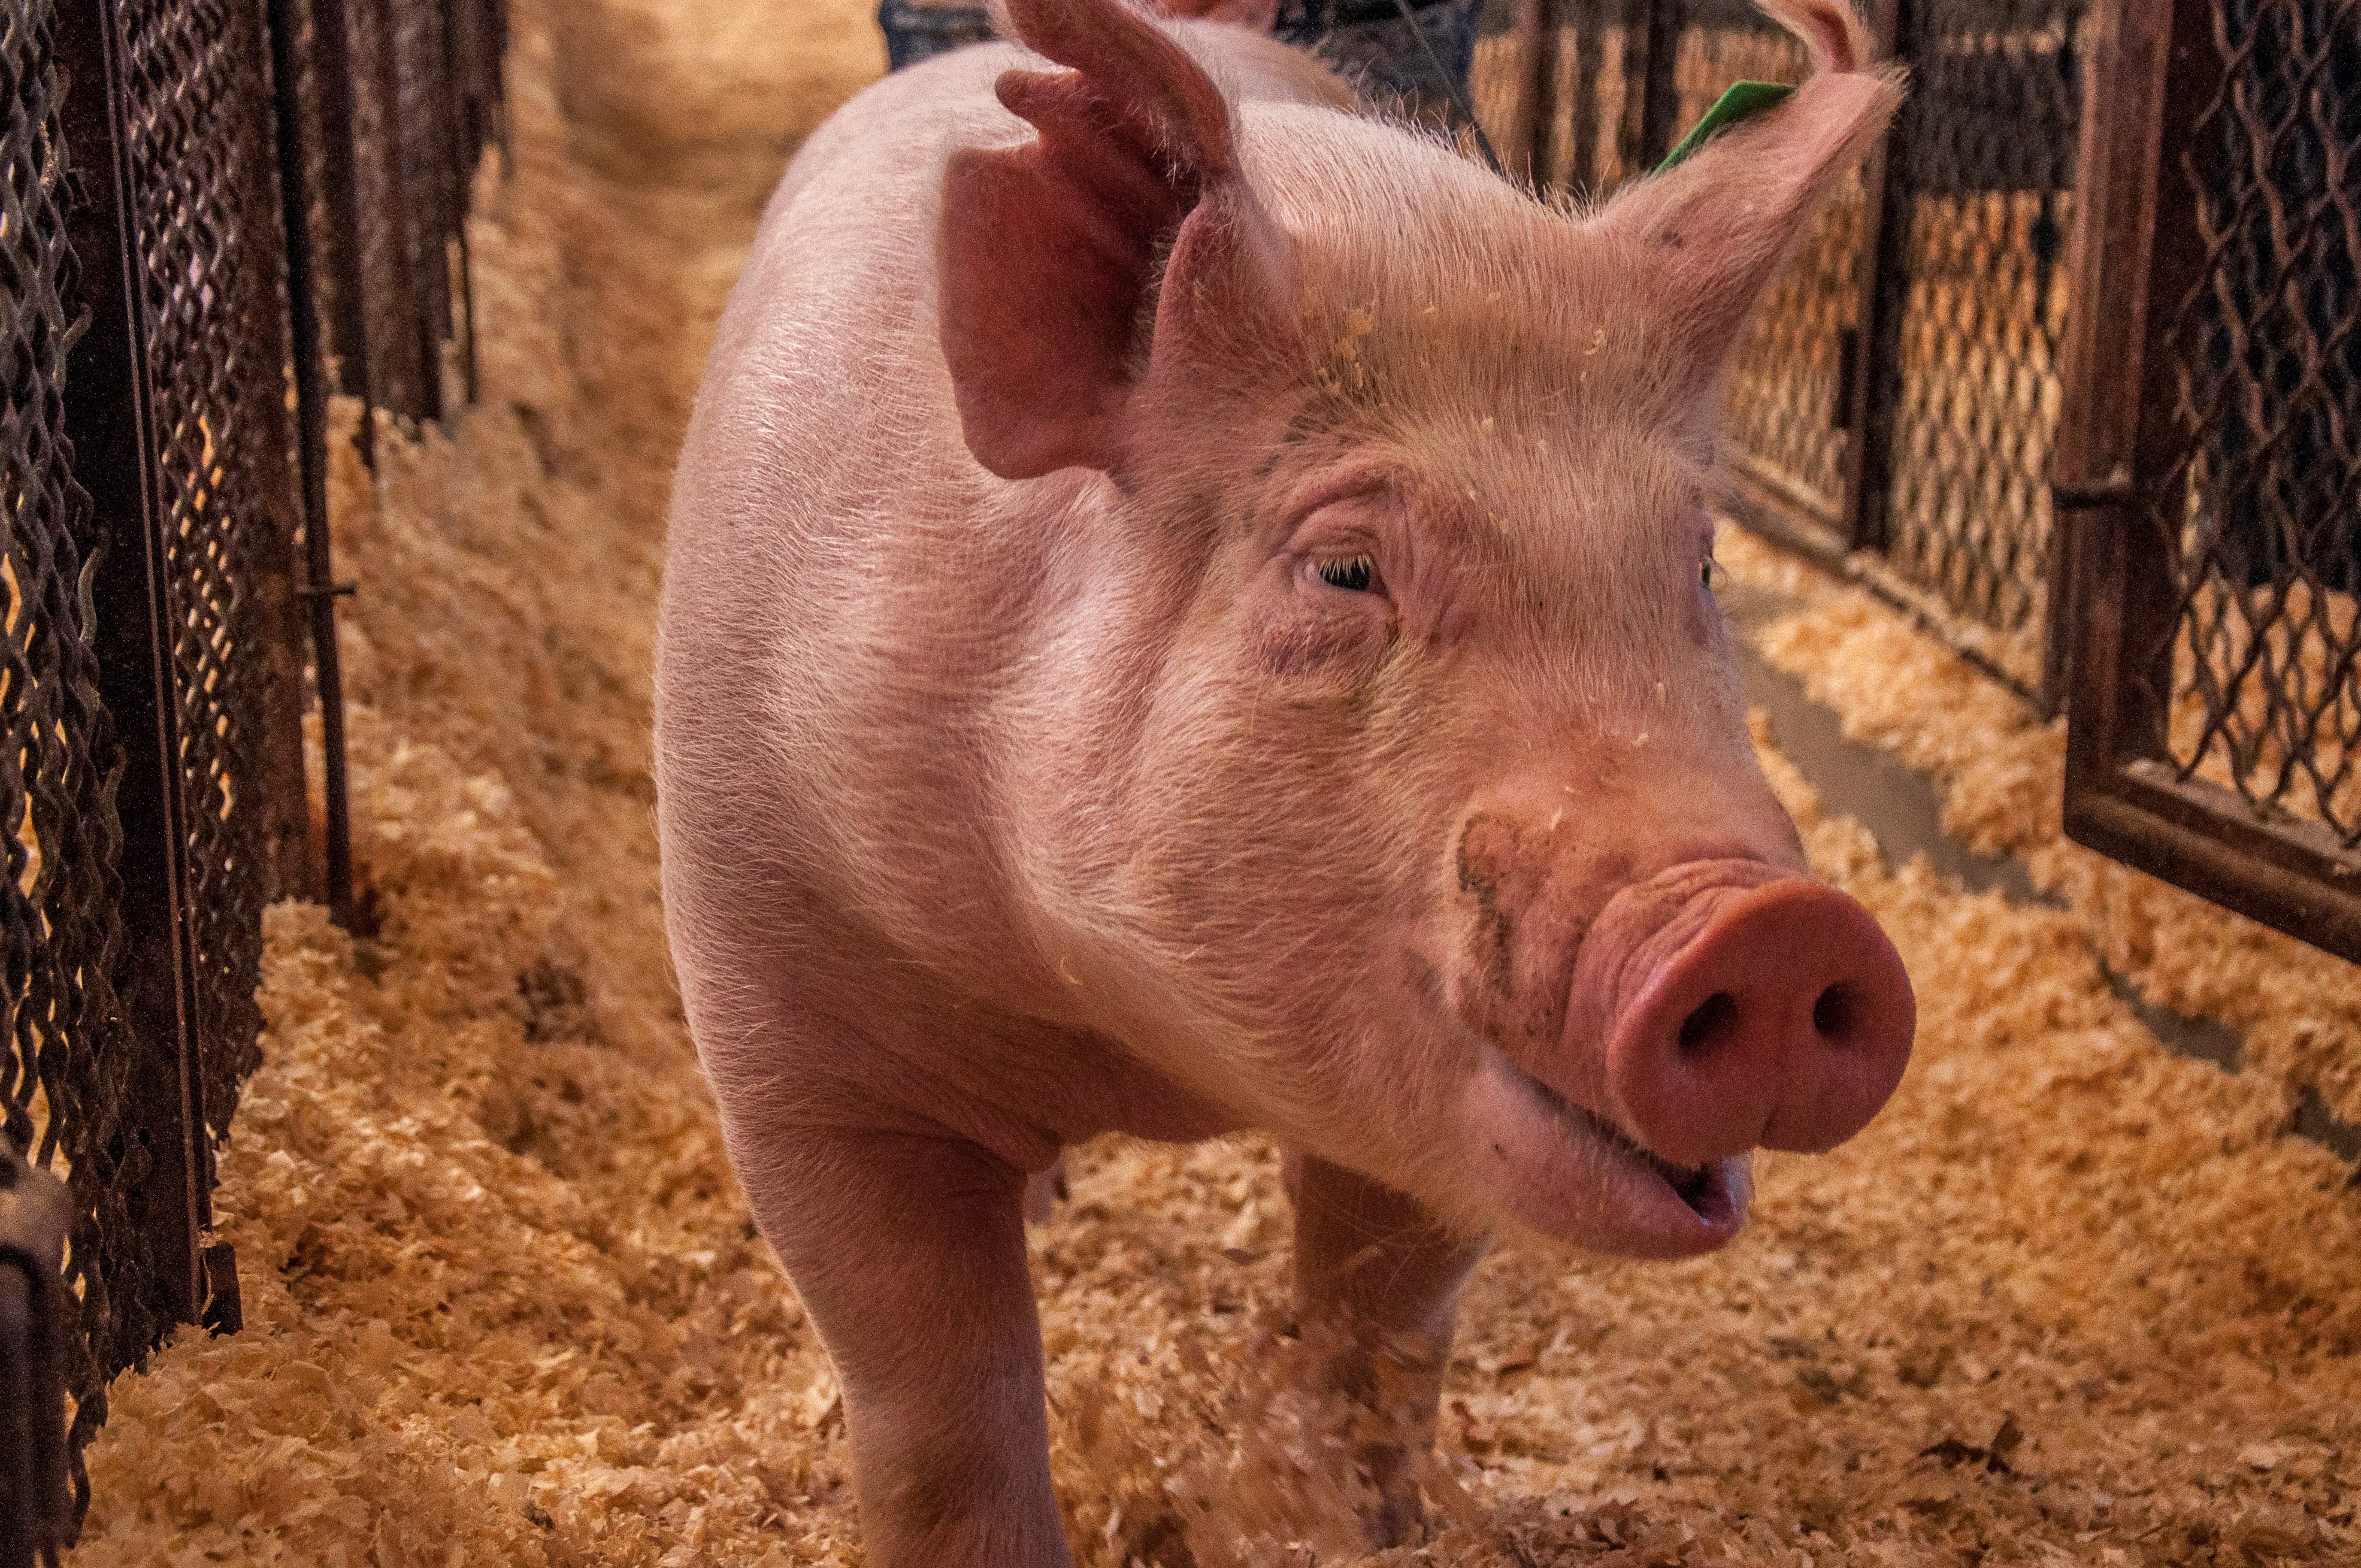 Hog Waste Still an Issue in North Carolina after Decades